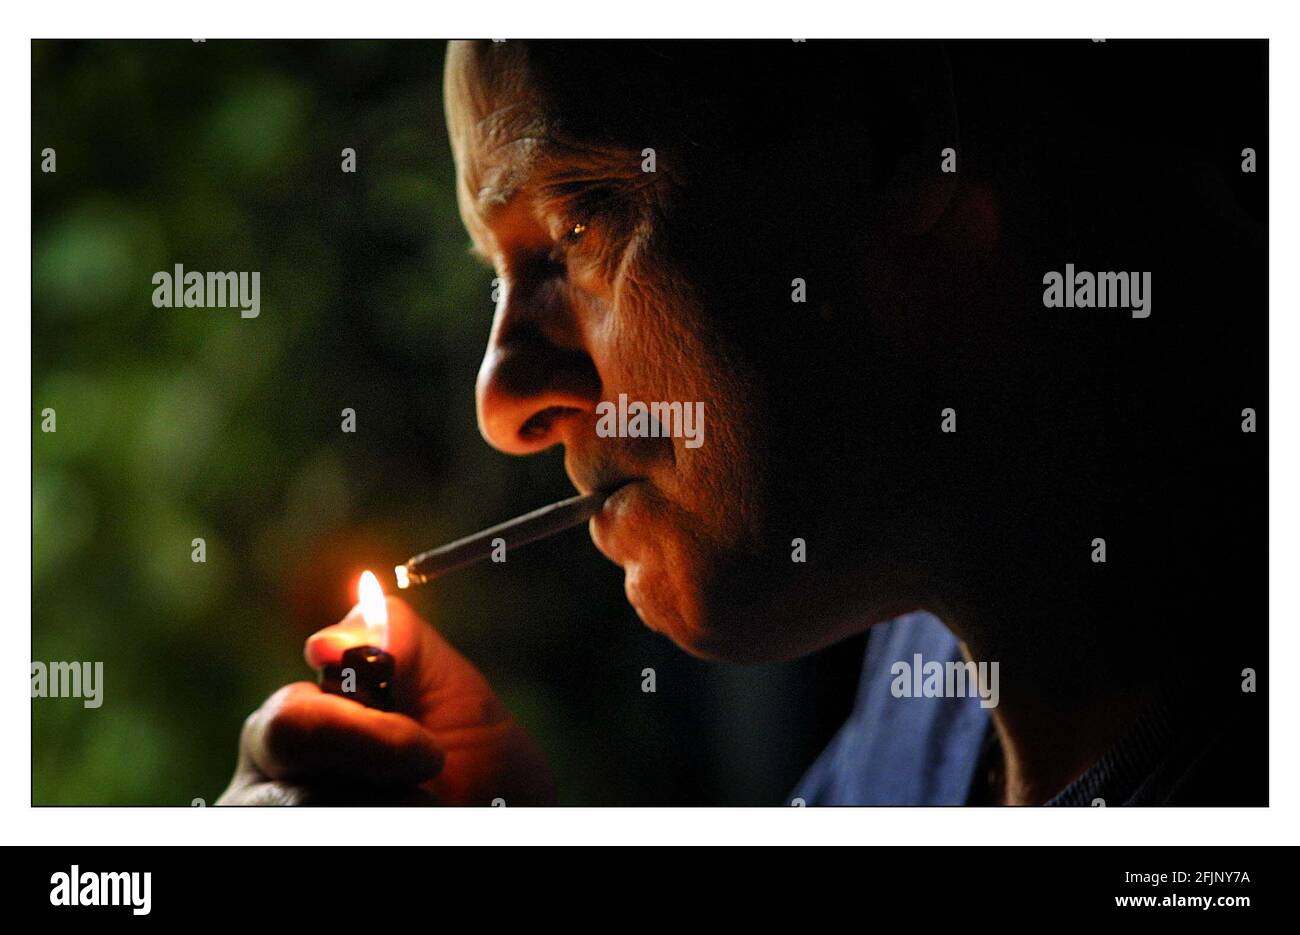 Geoff Vincent MS sufferer fuma marihuana para aliviar su symtoms.pic David Sandison 24/10/2001 Foto de stock